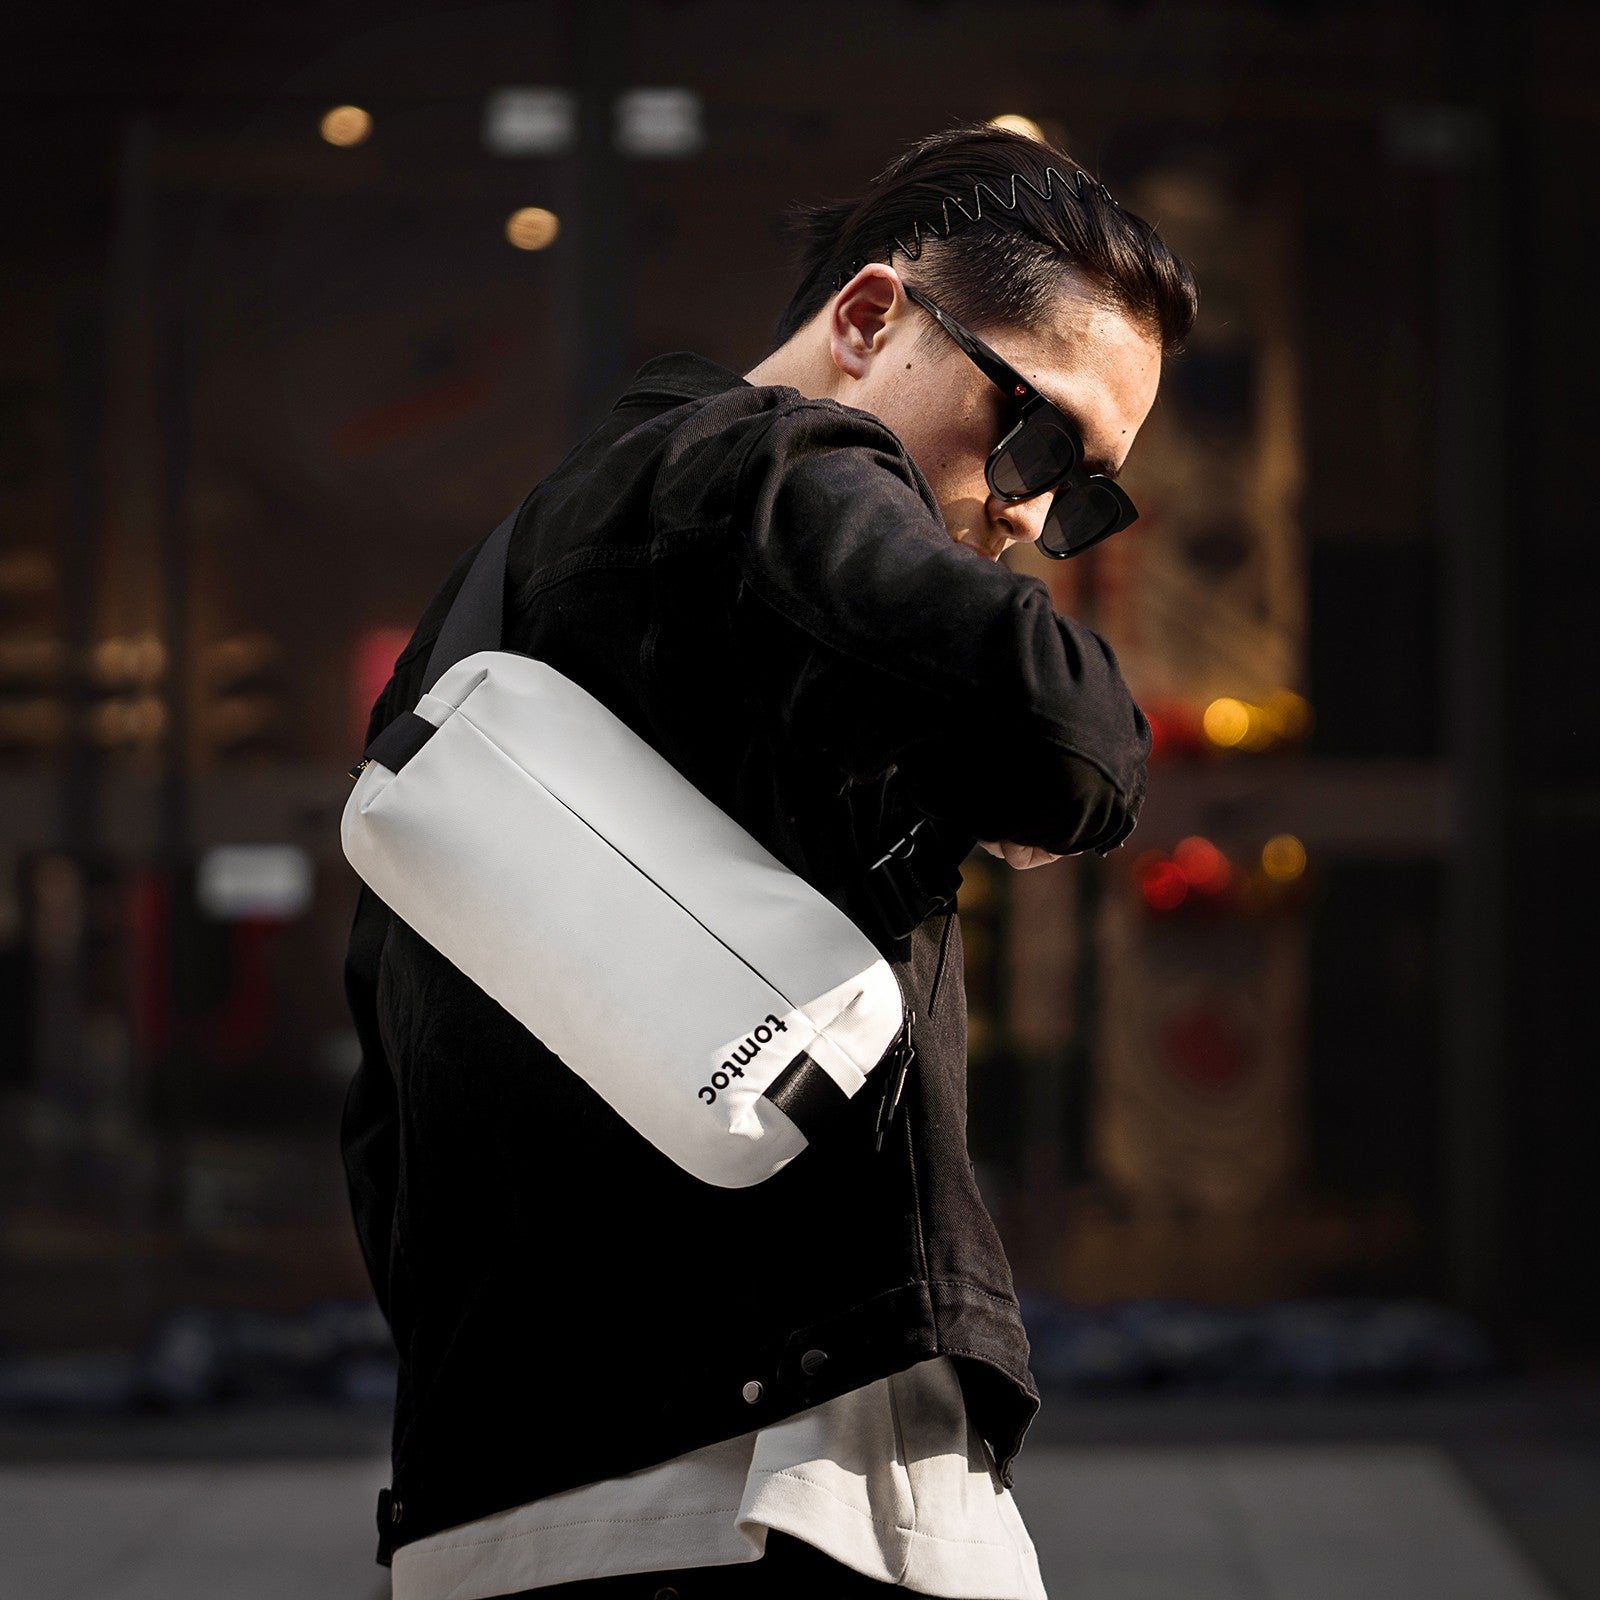 Buy THESTO White Trapezium Handbag Shoulder Sling Bag, Fashionable